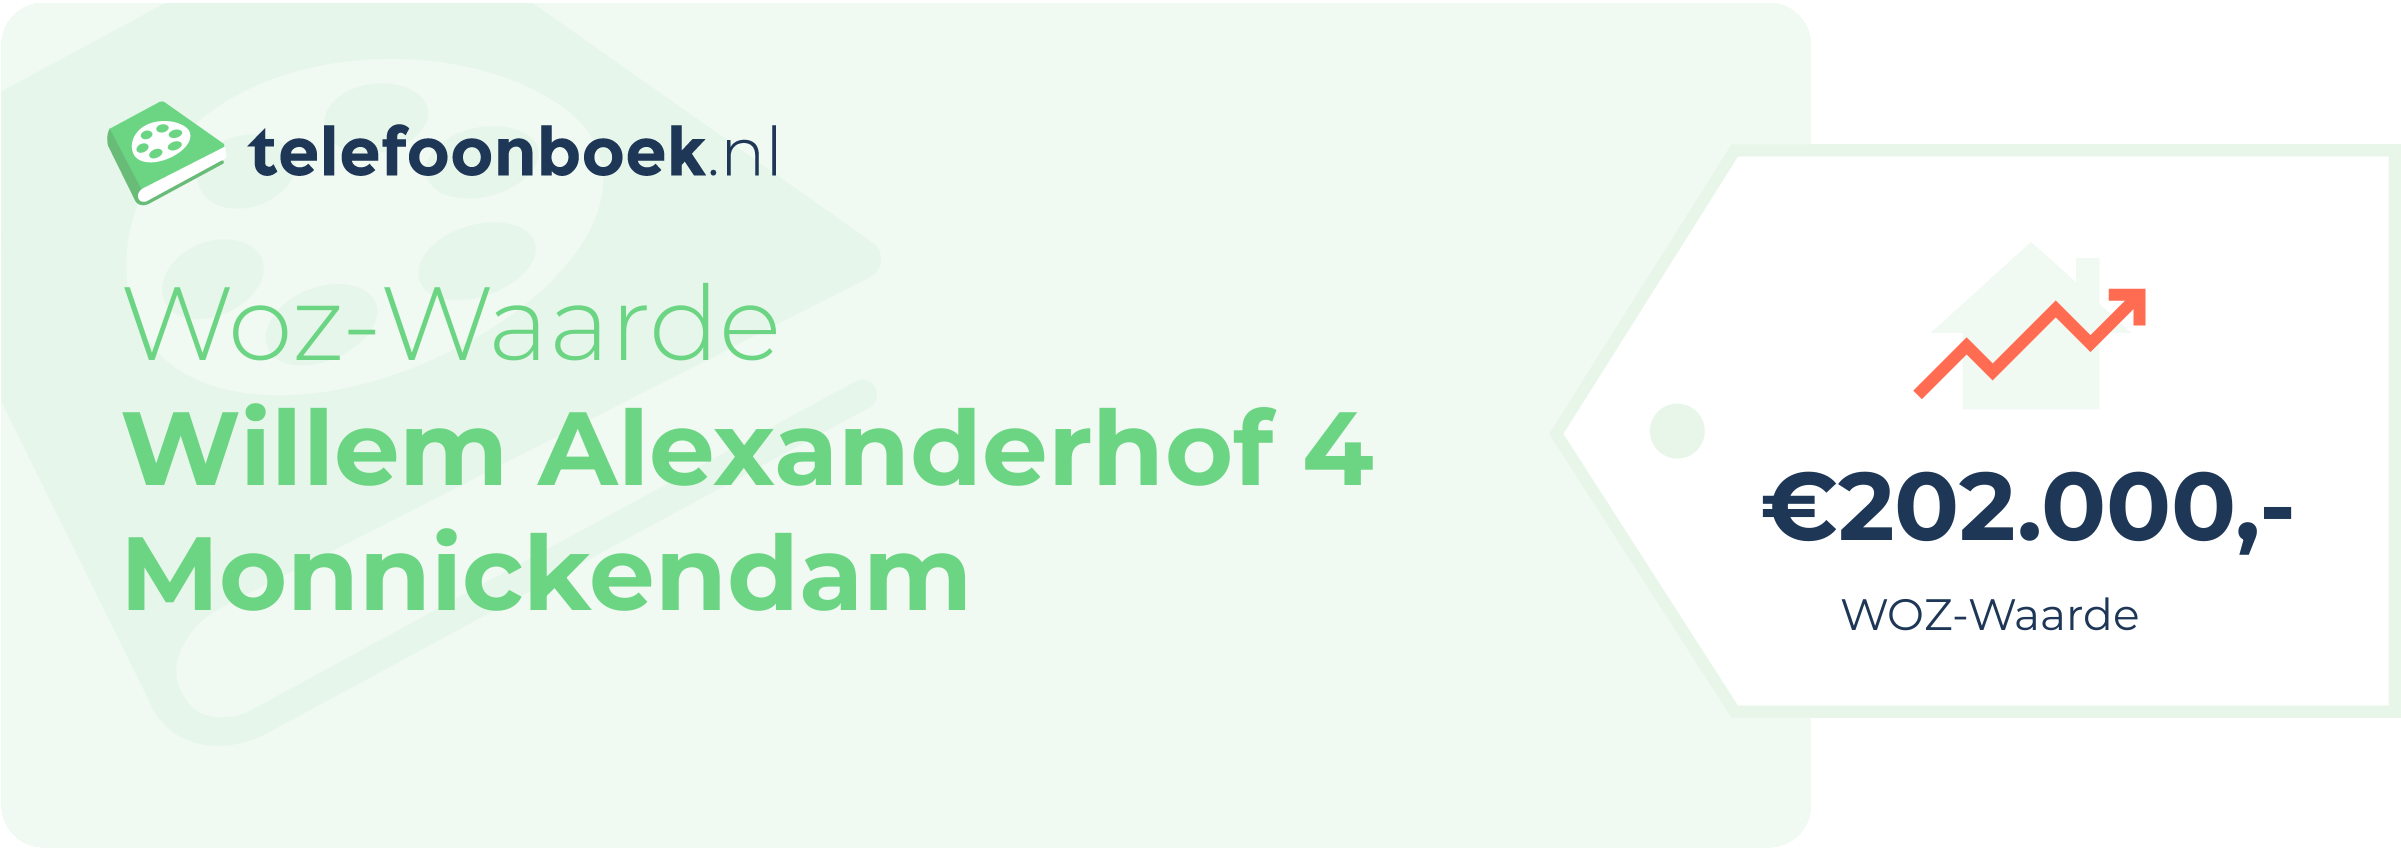 WOZ-waarde Willem Alexanderhof 4 Monnickendam